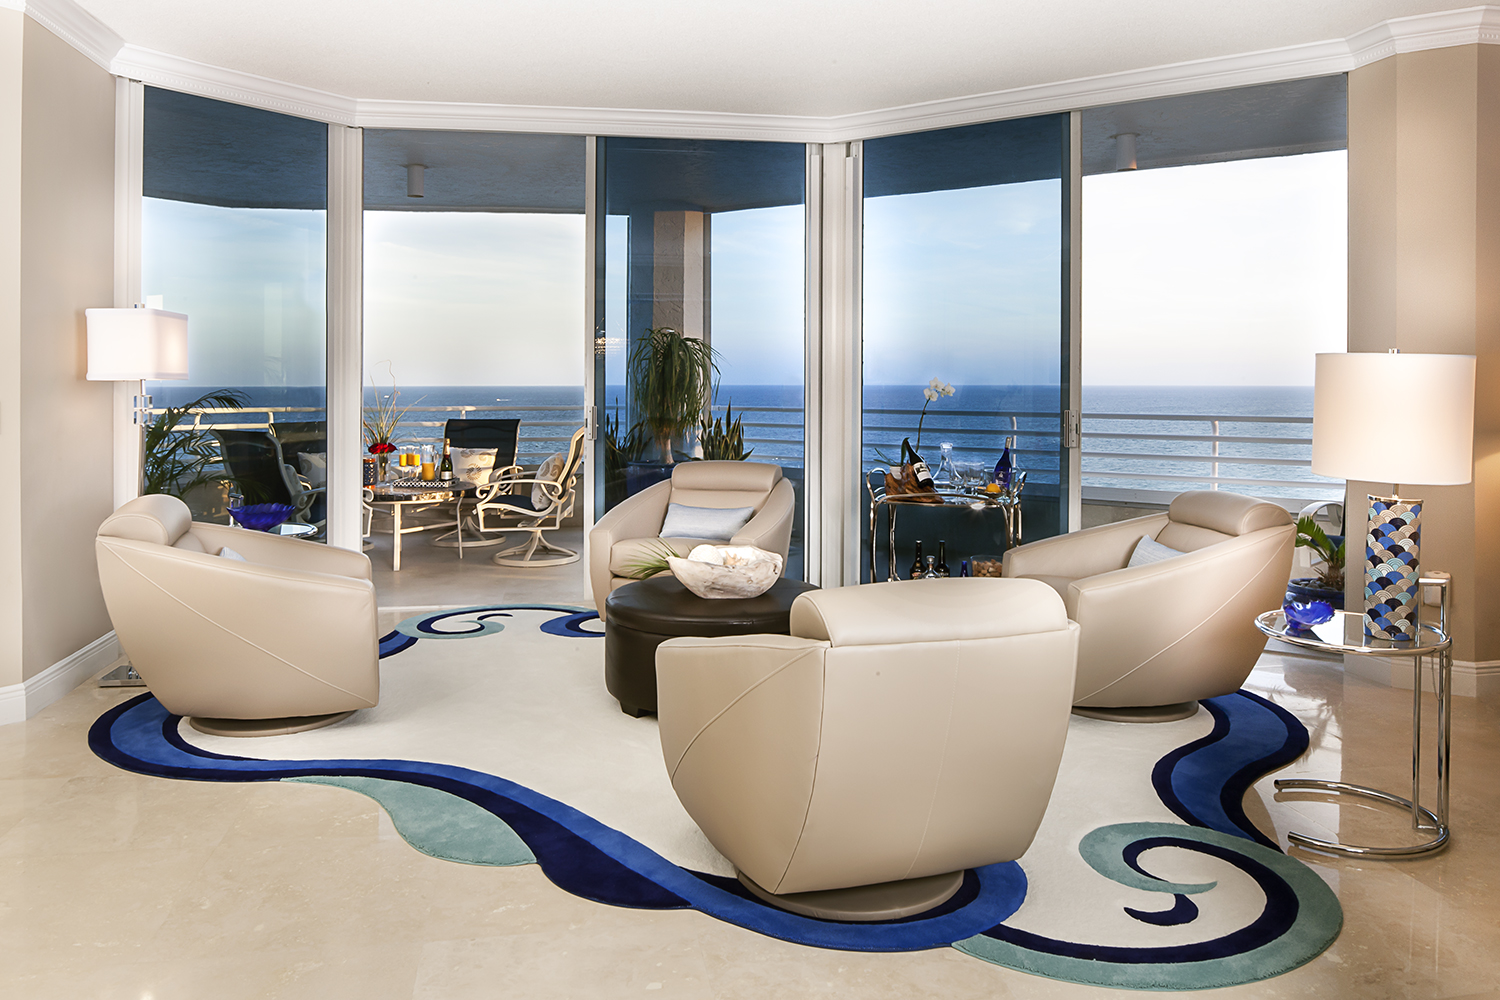 Miami condo living room with ceiling to floor windows